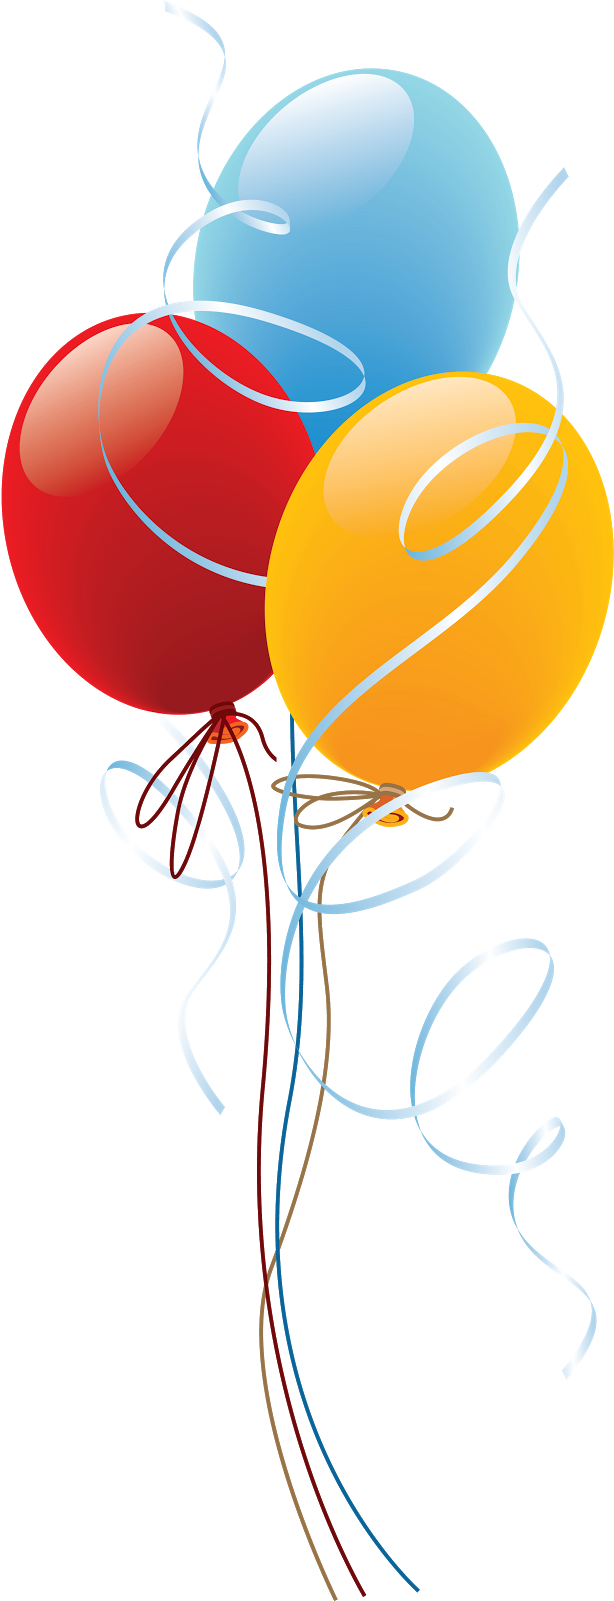 Birthday Cake Balloon Party Clip Art - Birthday Cake Balloon Party Clip Art (652x1600)